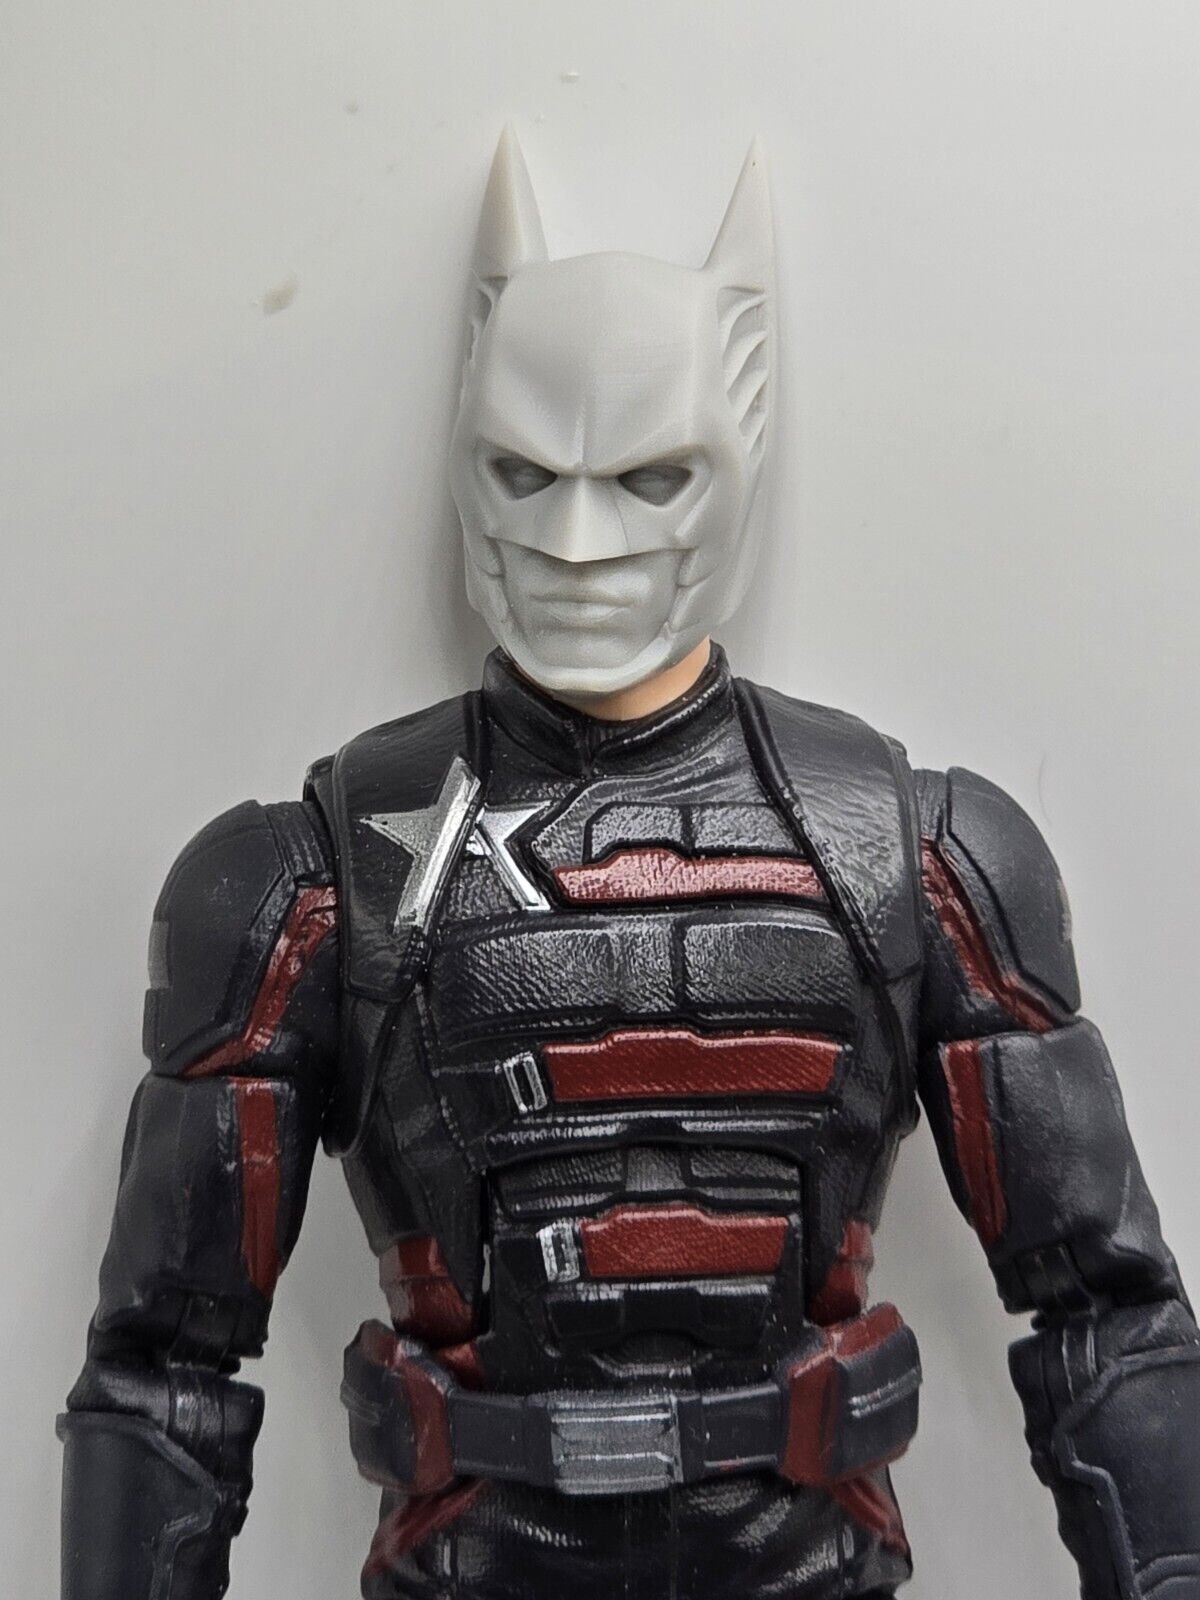 3d Printed VAL KILMER SONAR BATMAN HEAD 1:12 6" GI Joe Classified/Marvel Legends